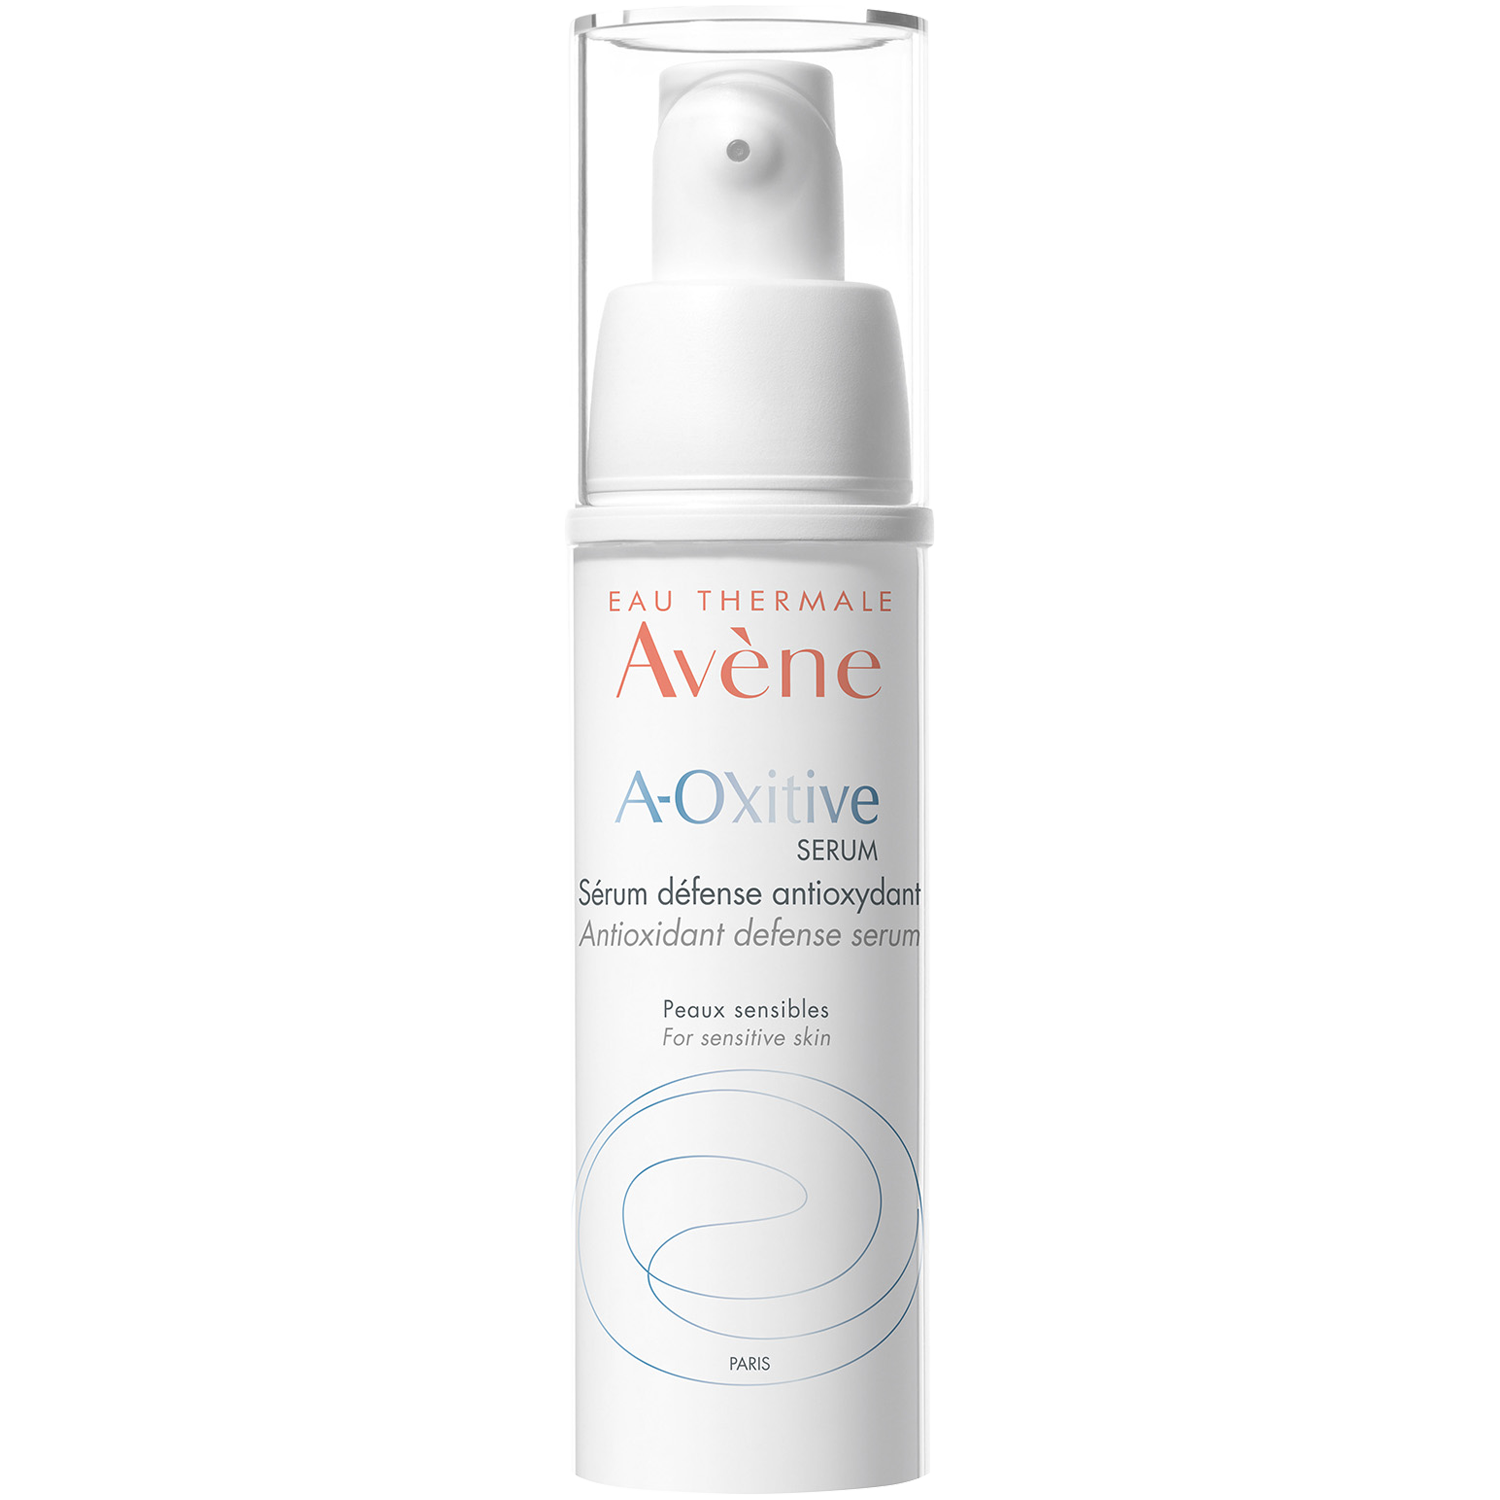 Avène A-Oxitive антиоксидантная защитная сыворотка, 30 мл avene a oxitive antioxidant defense serum sensitive skins антиоксидантная защитная сыворотка 30 мл